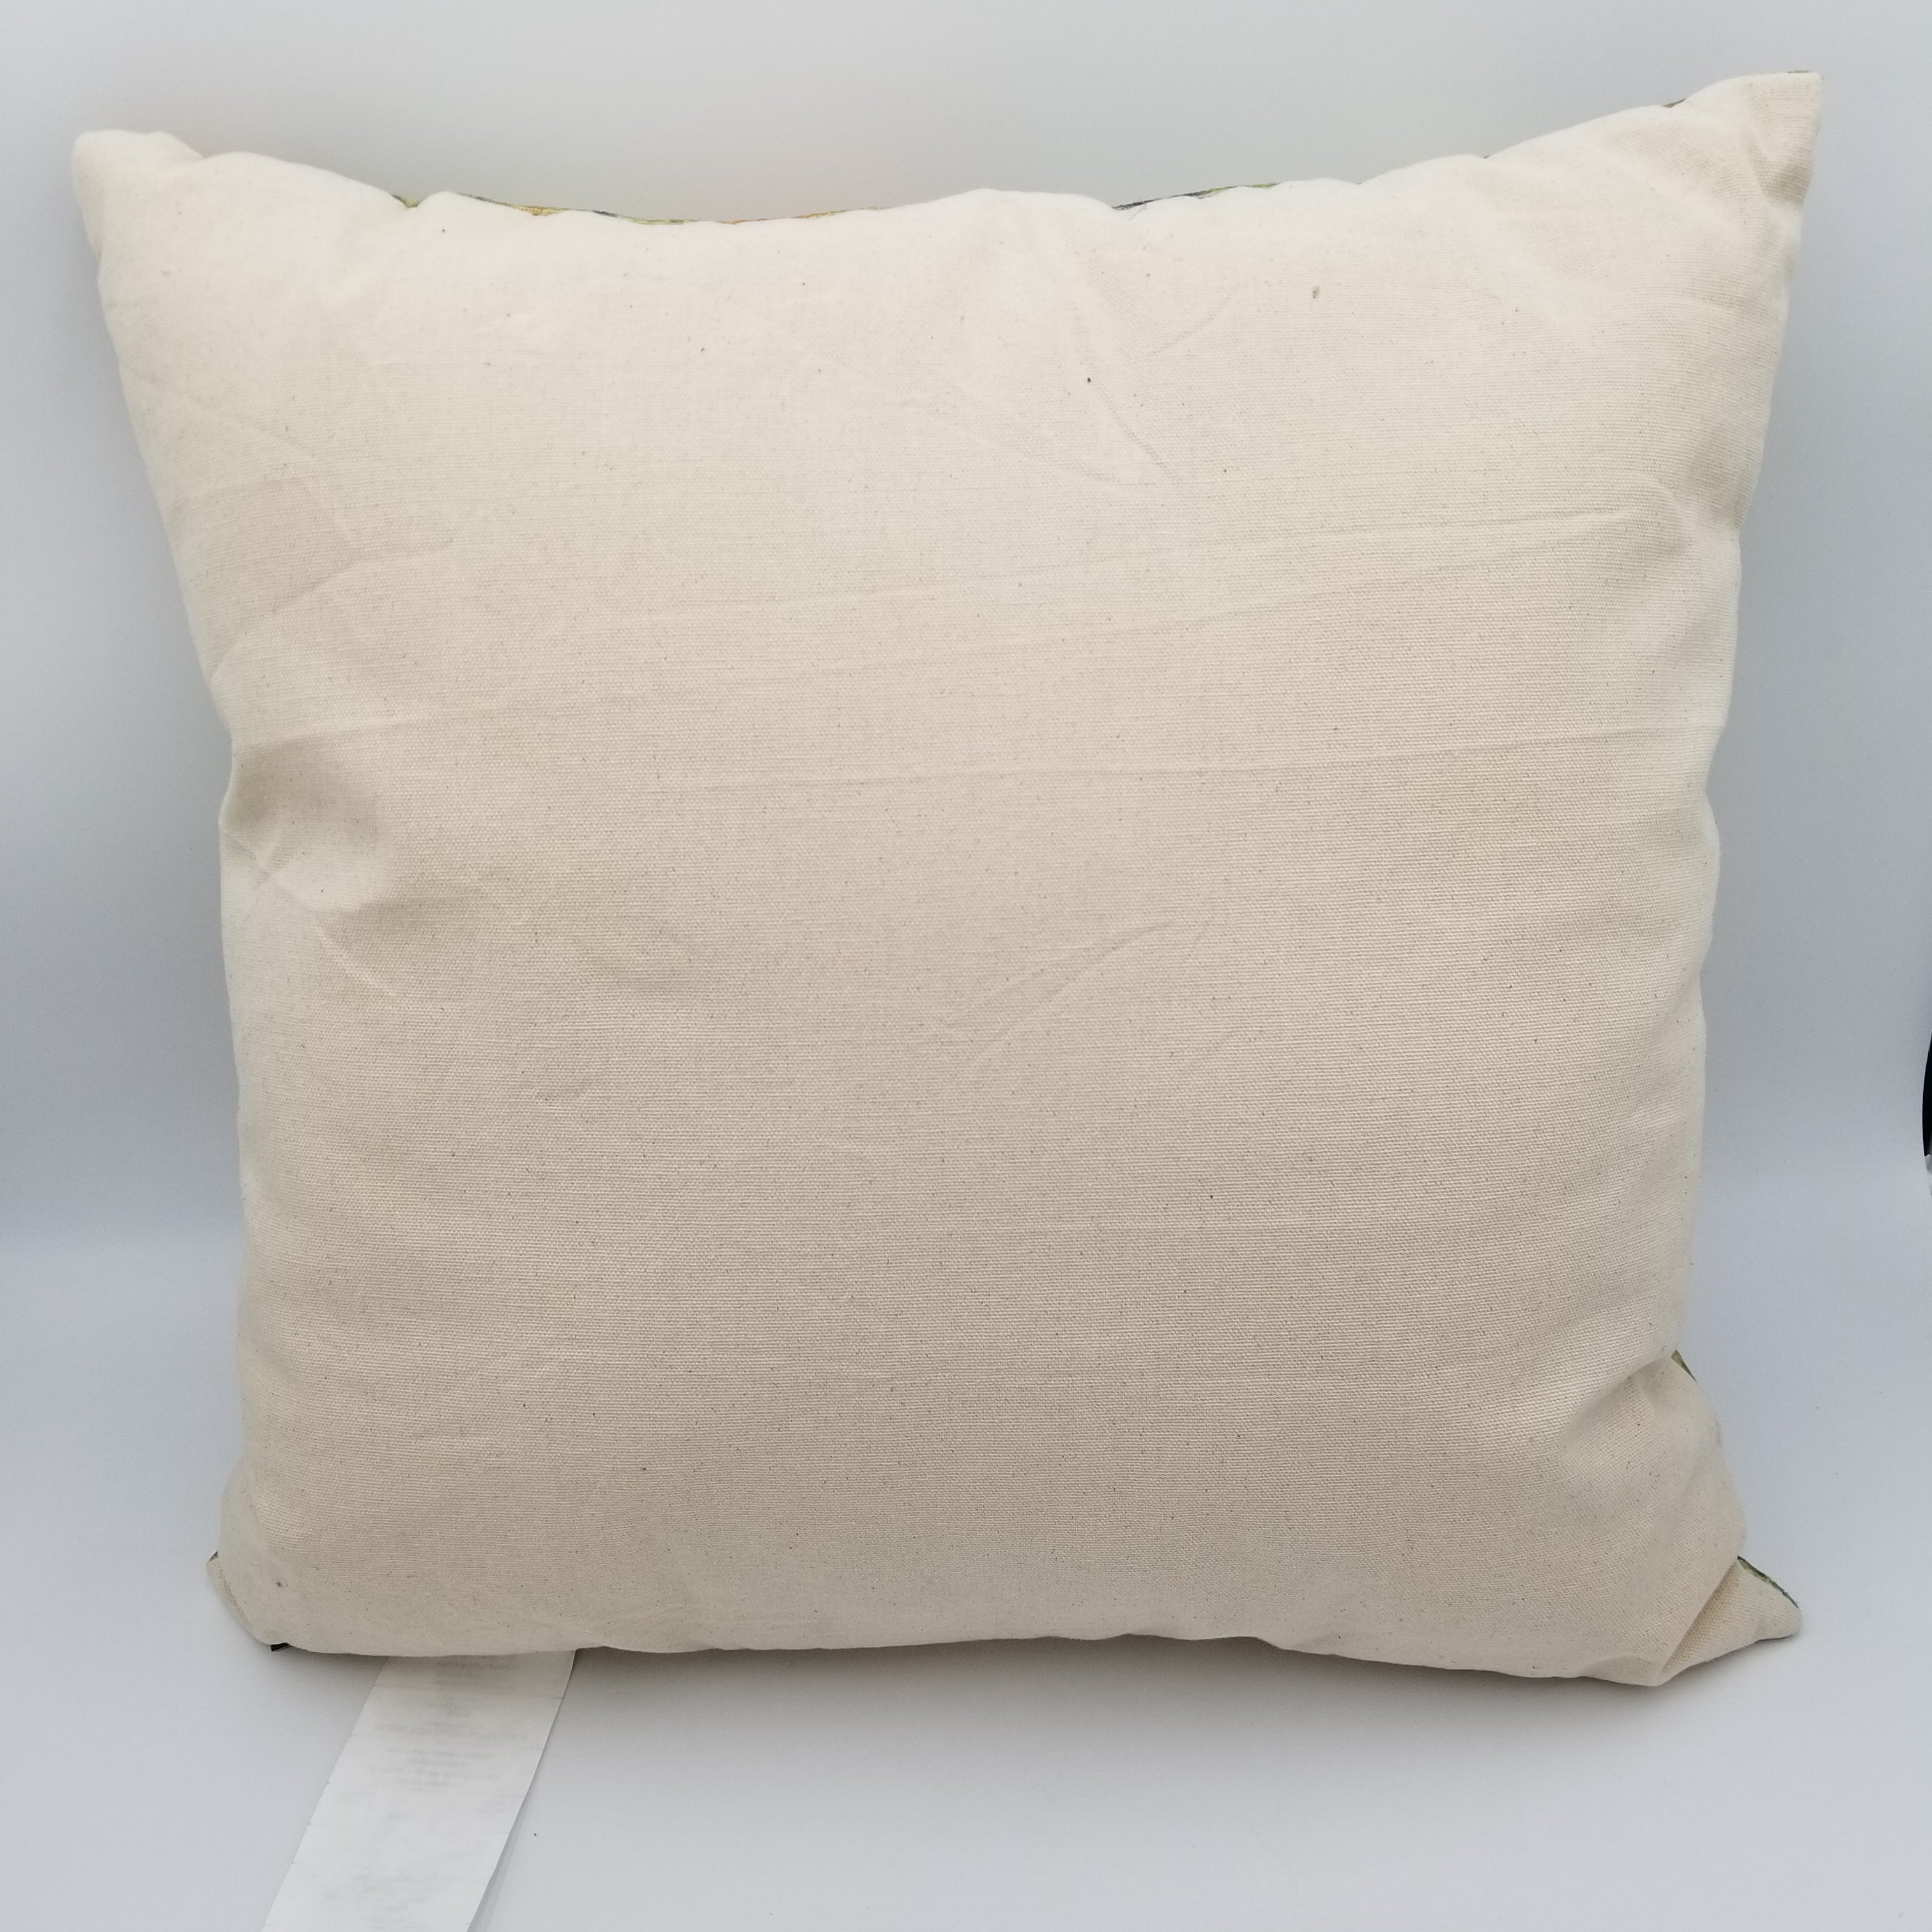 Decorative Pillow 18" x 18"